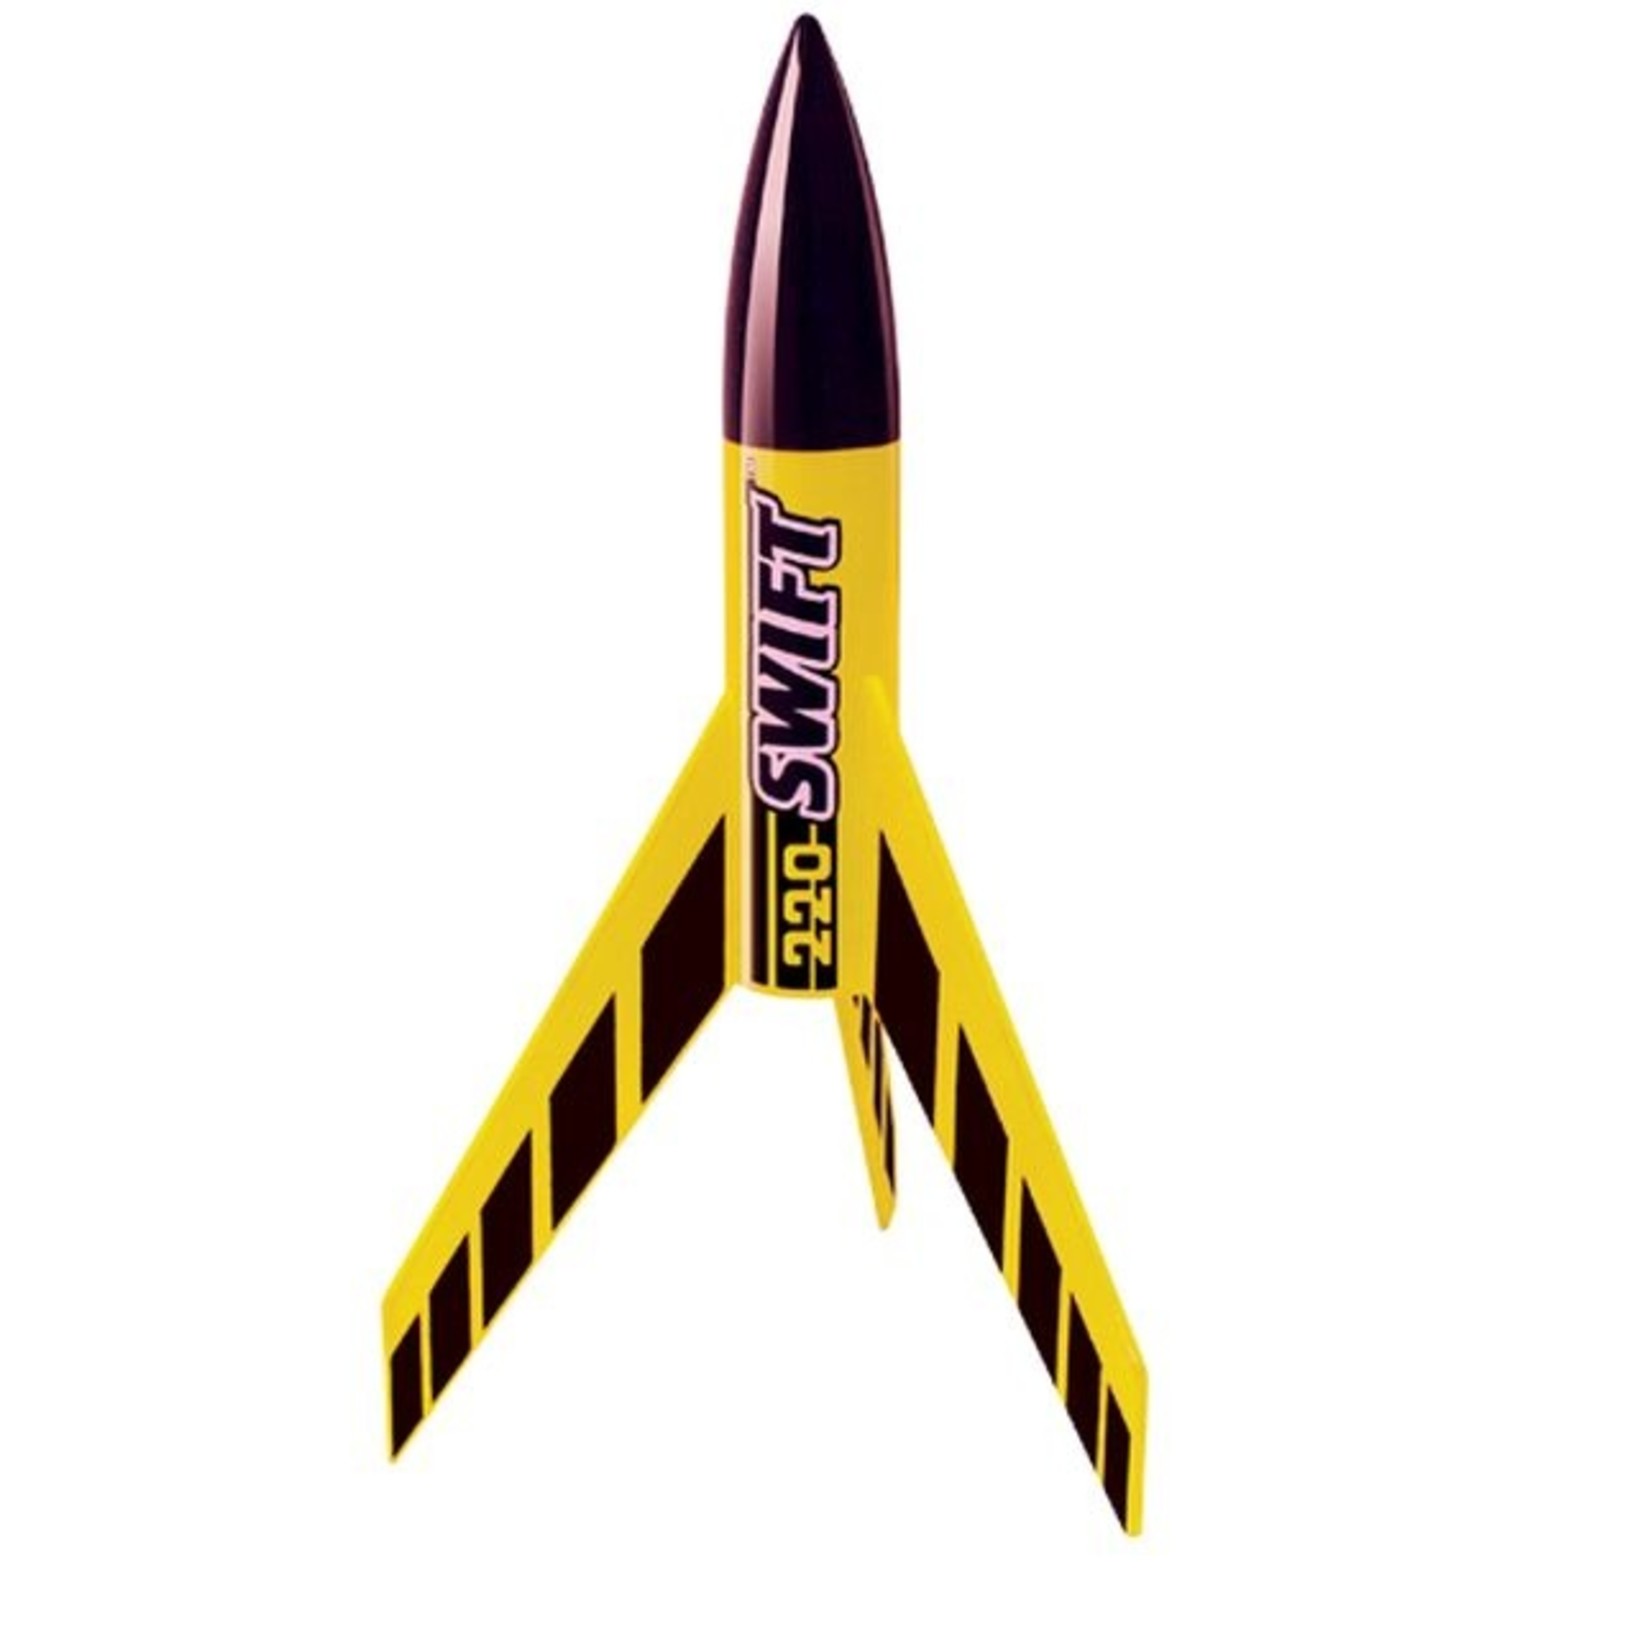 Estes Rockets EST0810 - 220 Swift Rocket Kit, Skill Level 1